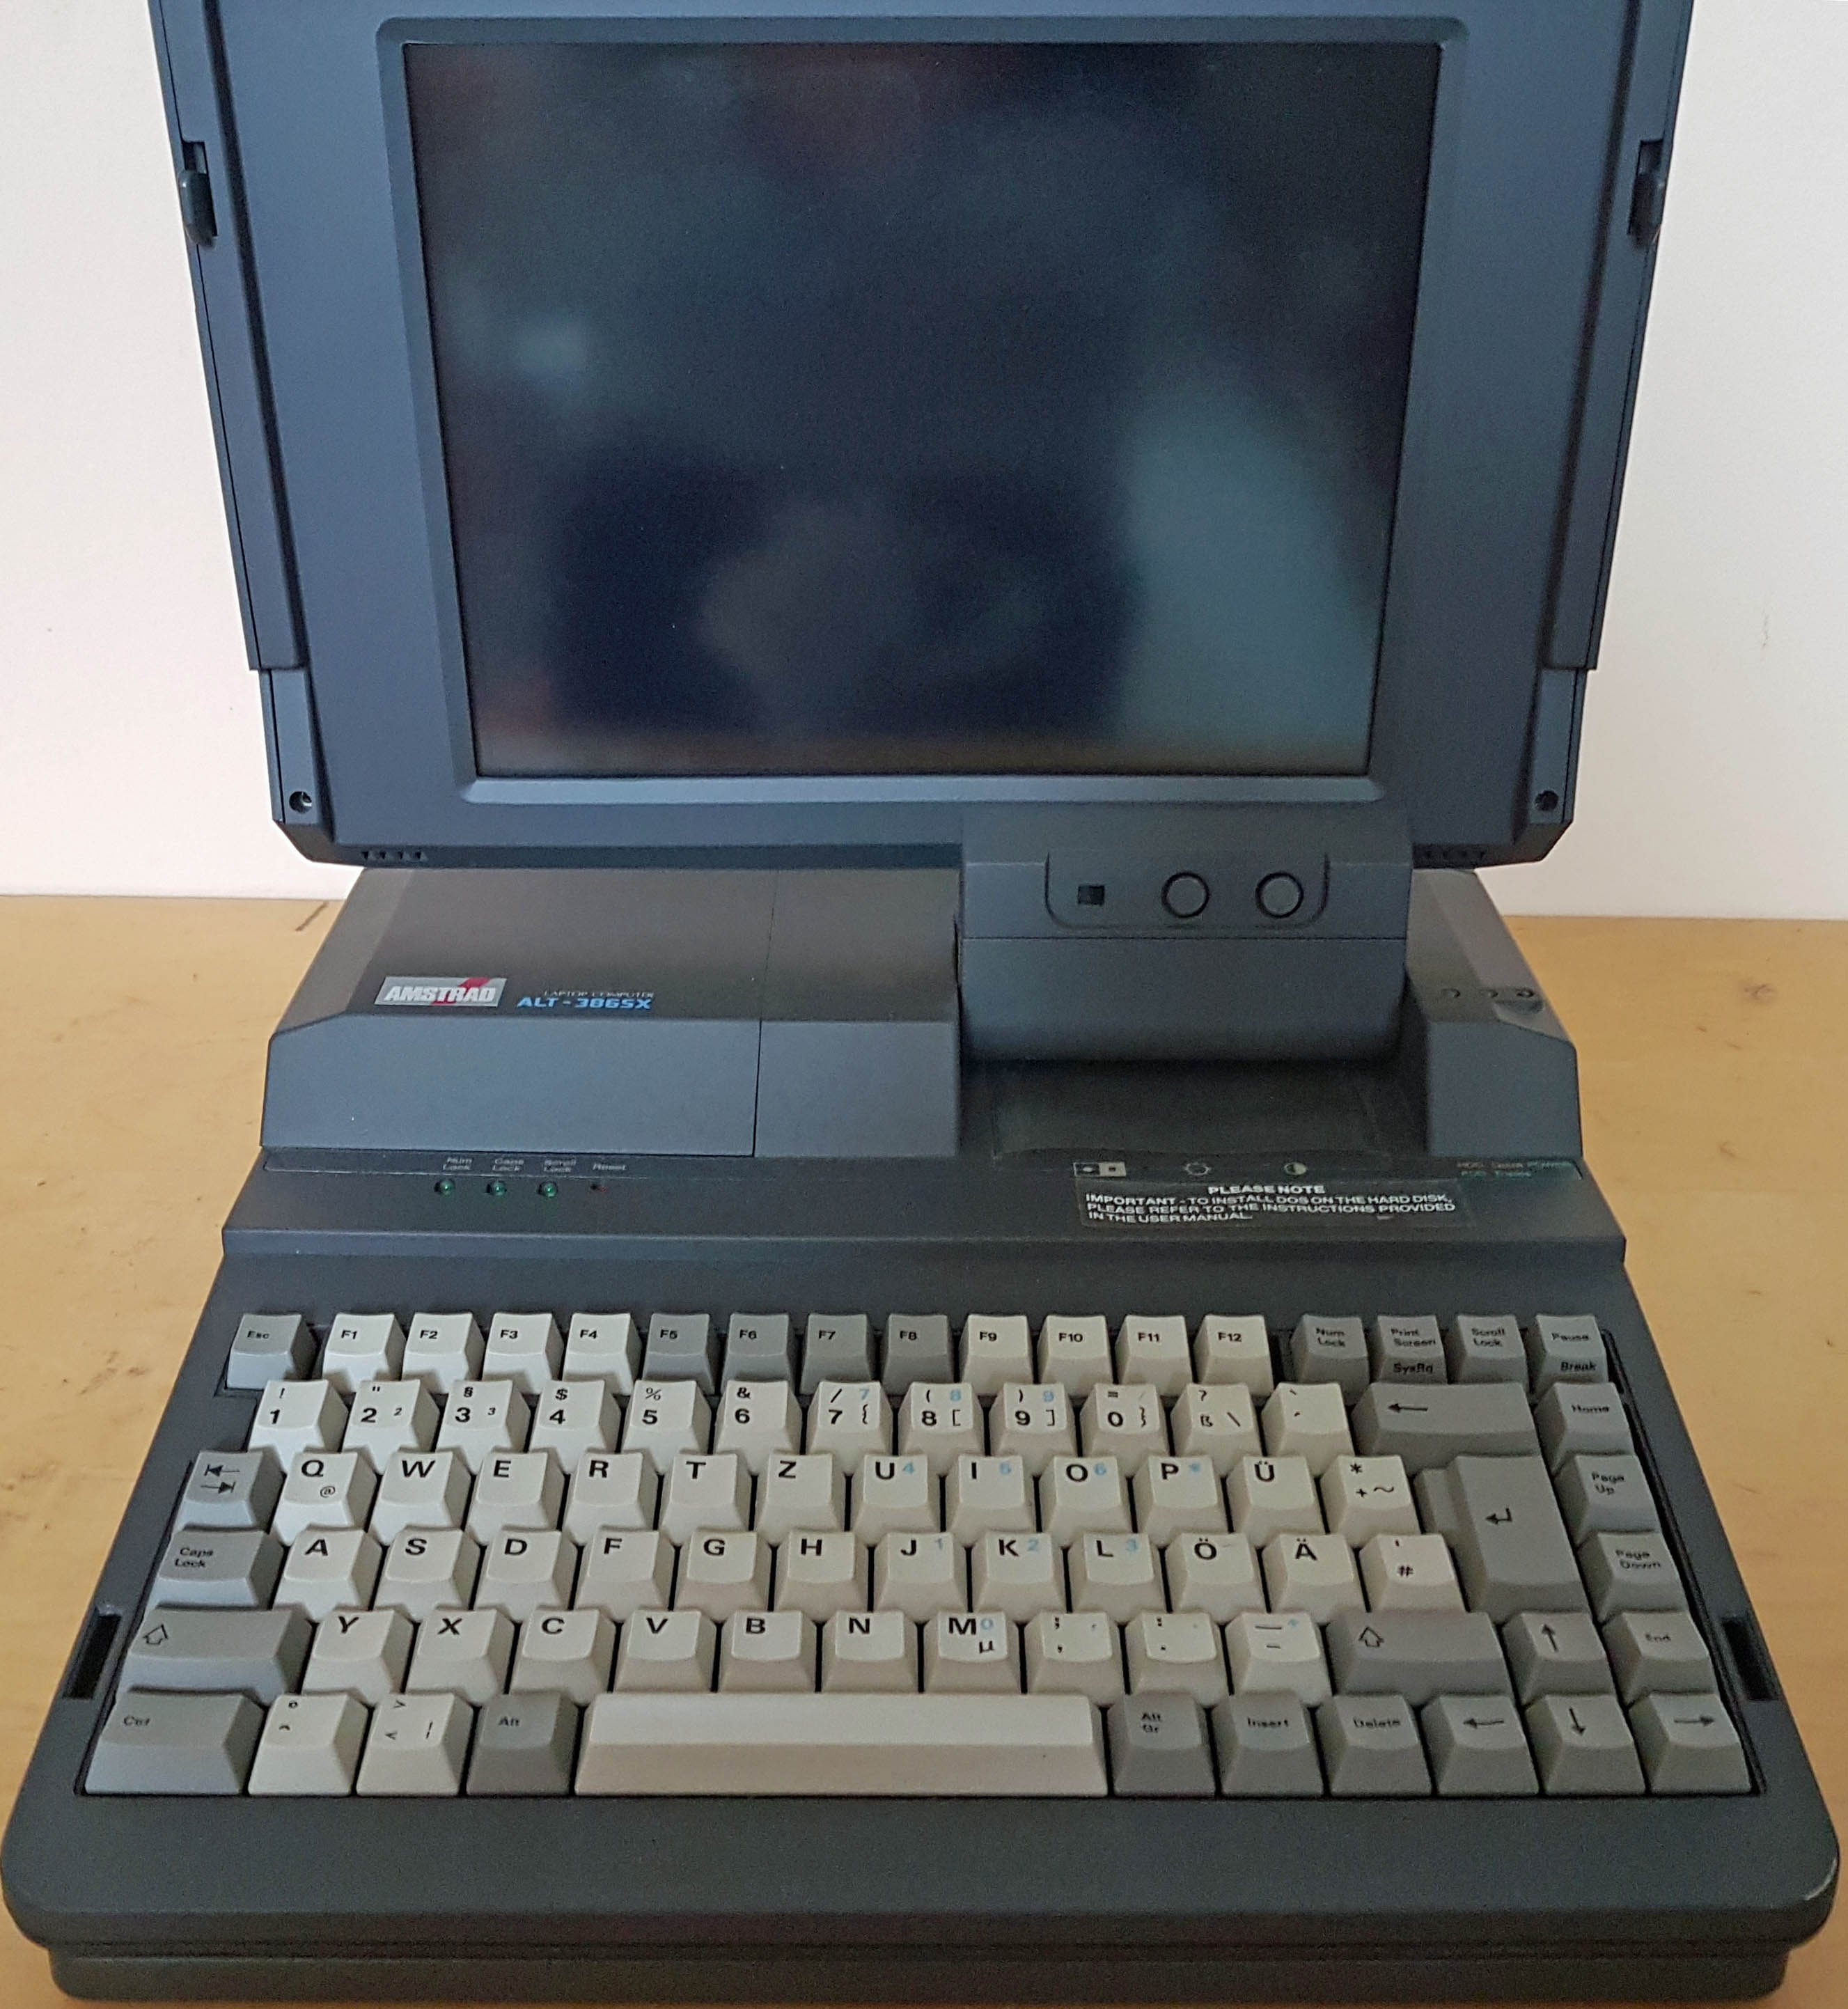 PC Computer	Amstrad ALT-386 SX (museum comp:ex CC BY-NC-SA)